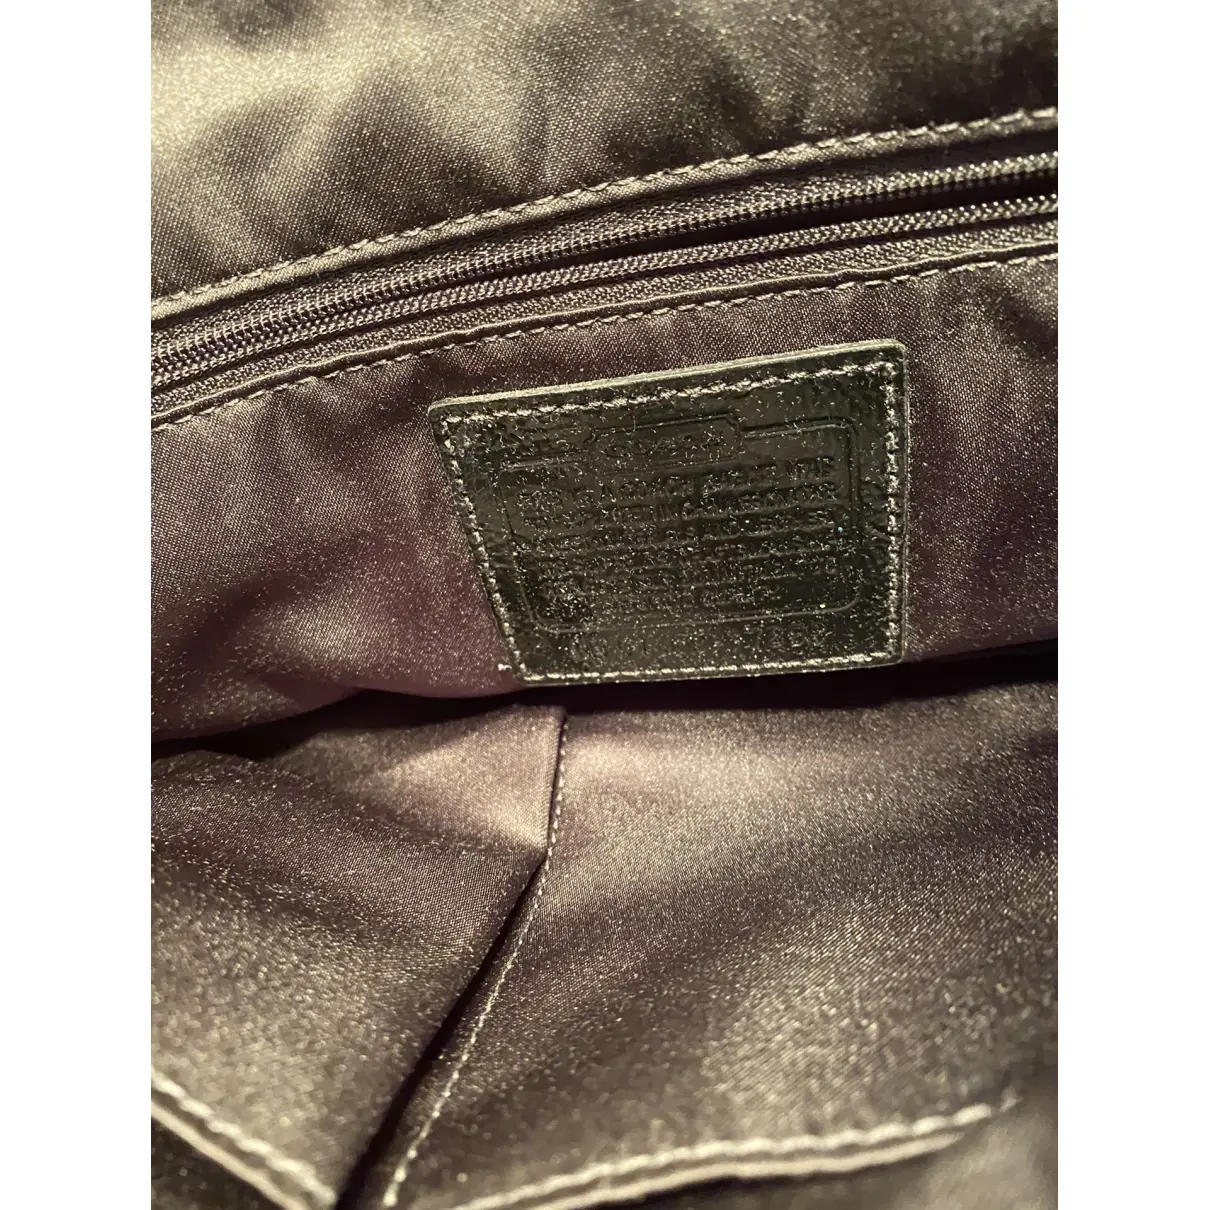 Patent leather crossbody bag Coach